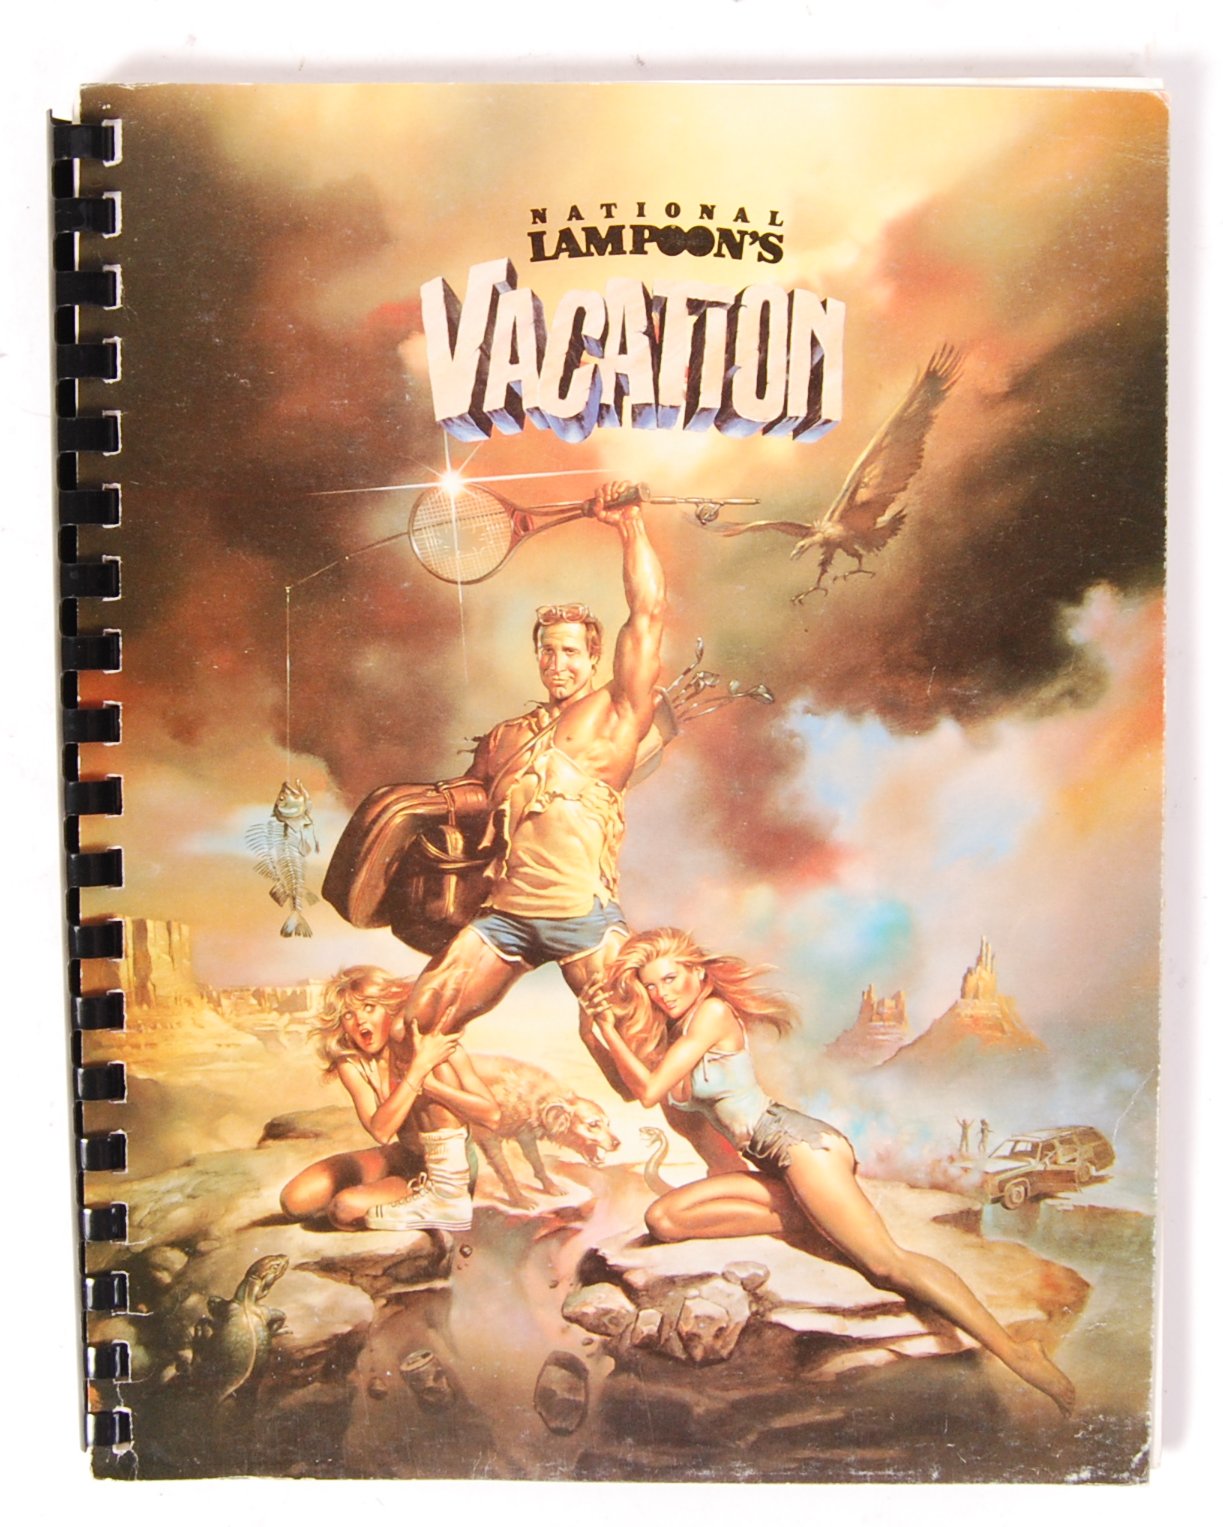 NATIONAL LAMPOON'S VACATION - 1983 - ORIGINAL PRES